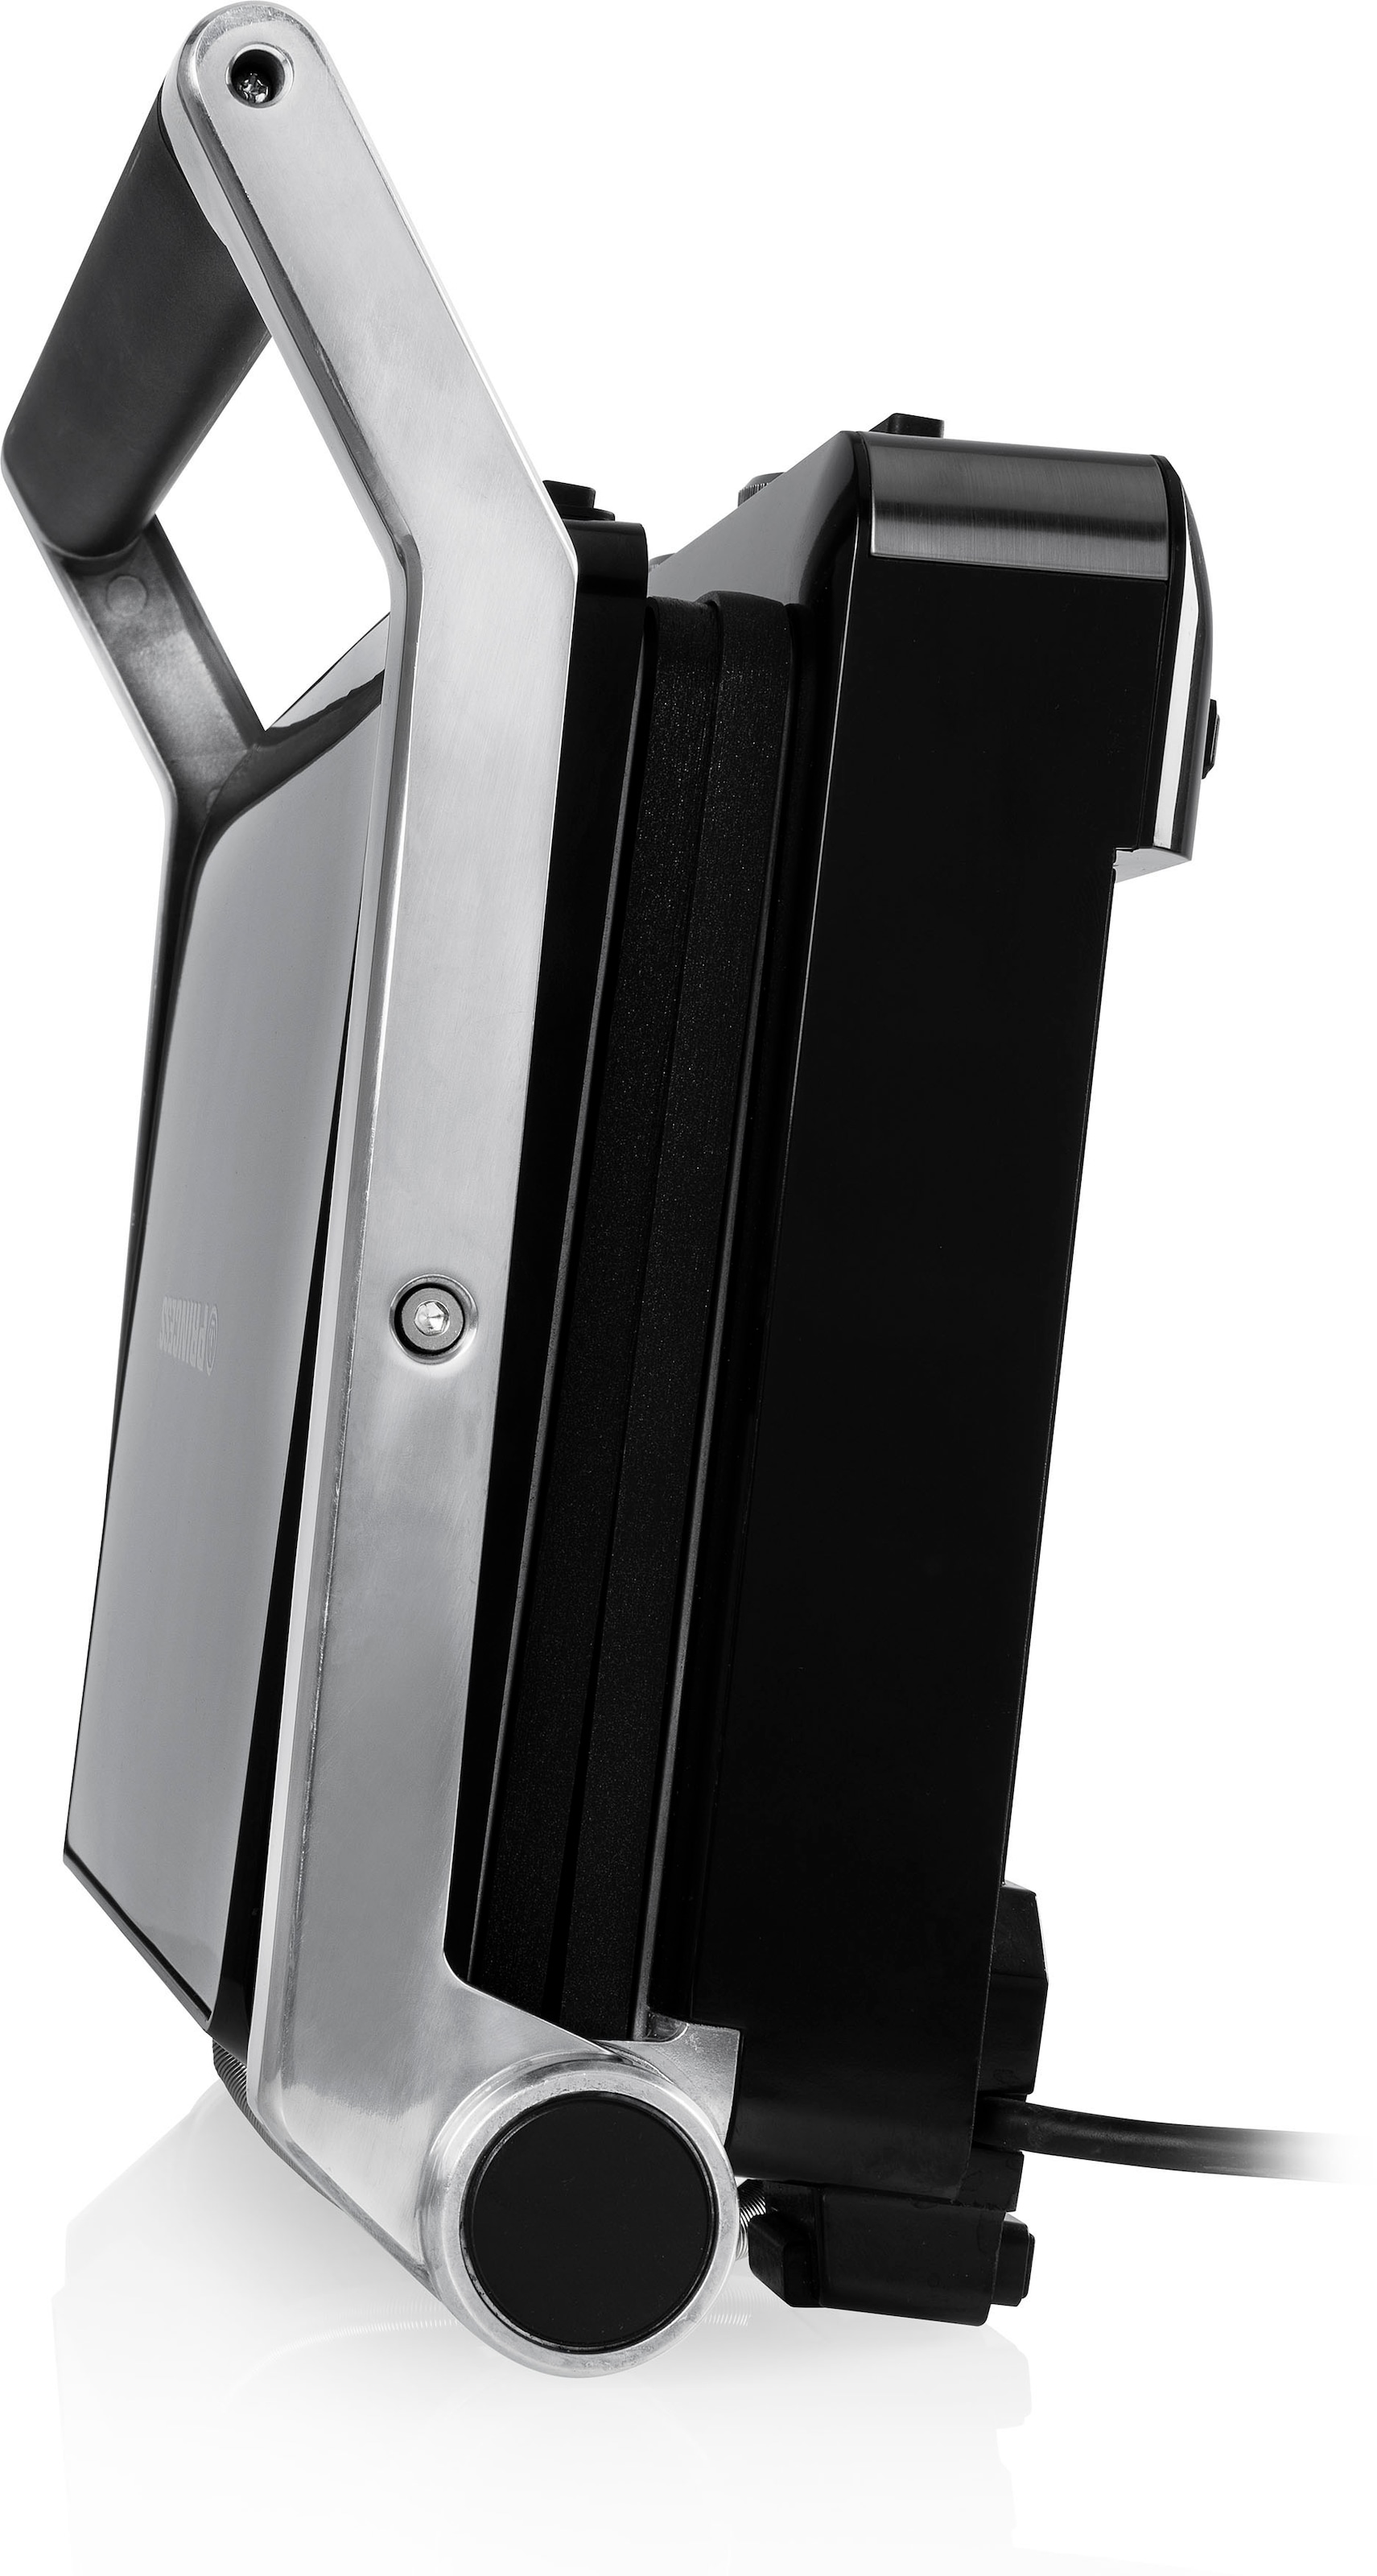 PRINCESS Kontaktgrill »117310 Digital Grill Master Pro«, 2000 W, 2 einstellbare Thermostate - Digitales Bedienfeld